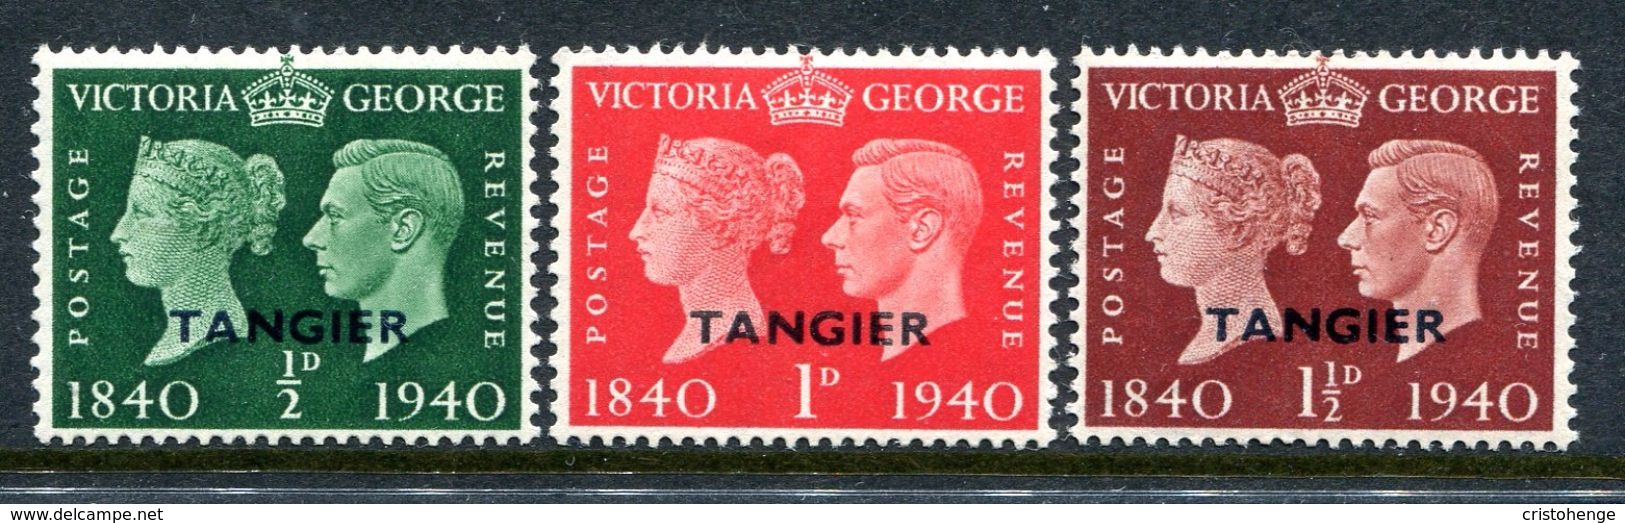 Morocco Agencies - Tangier - 1940 KGVI GB Overprints - Postage Stamp Centenary Set HM (SG 248-50) - Morocco Agencies / Tangier (...-1958)